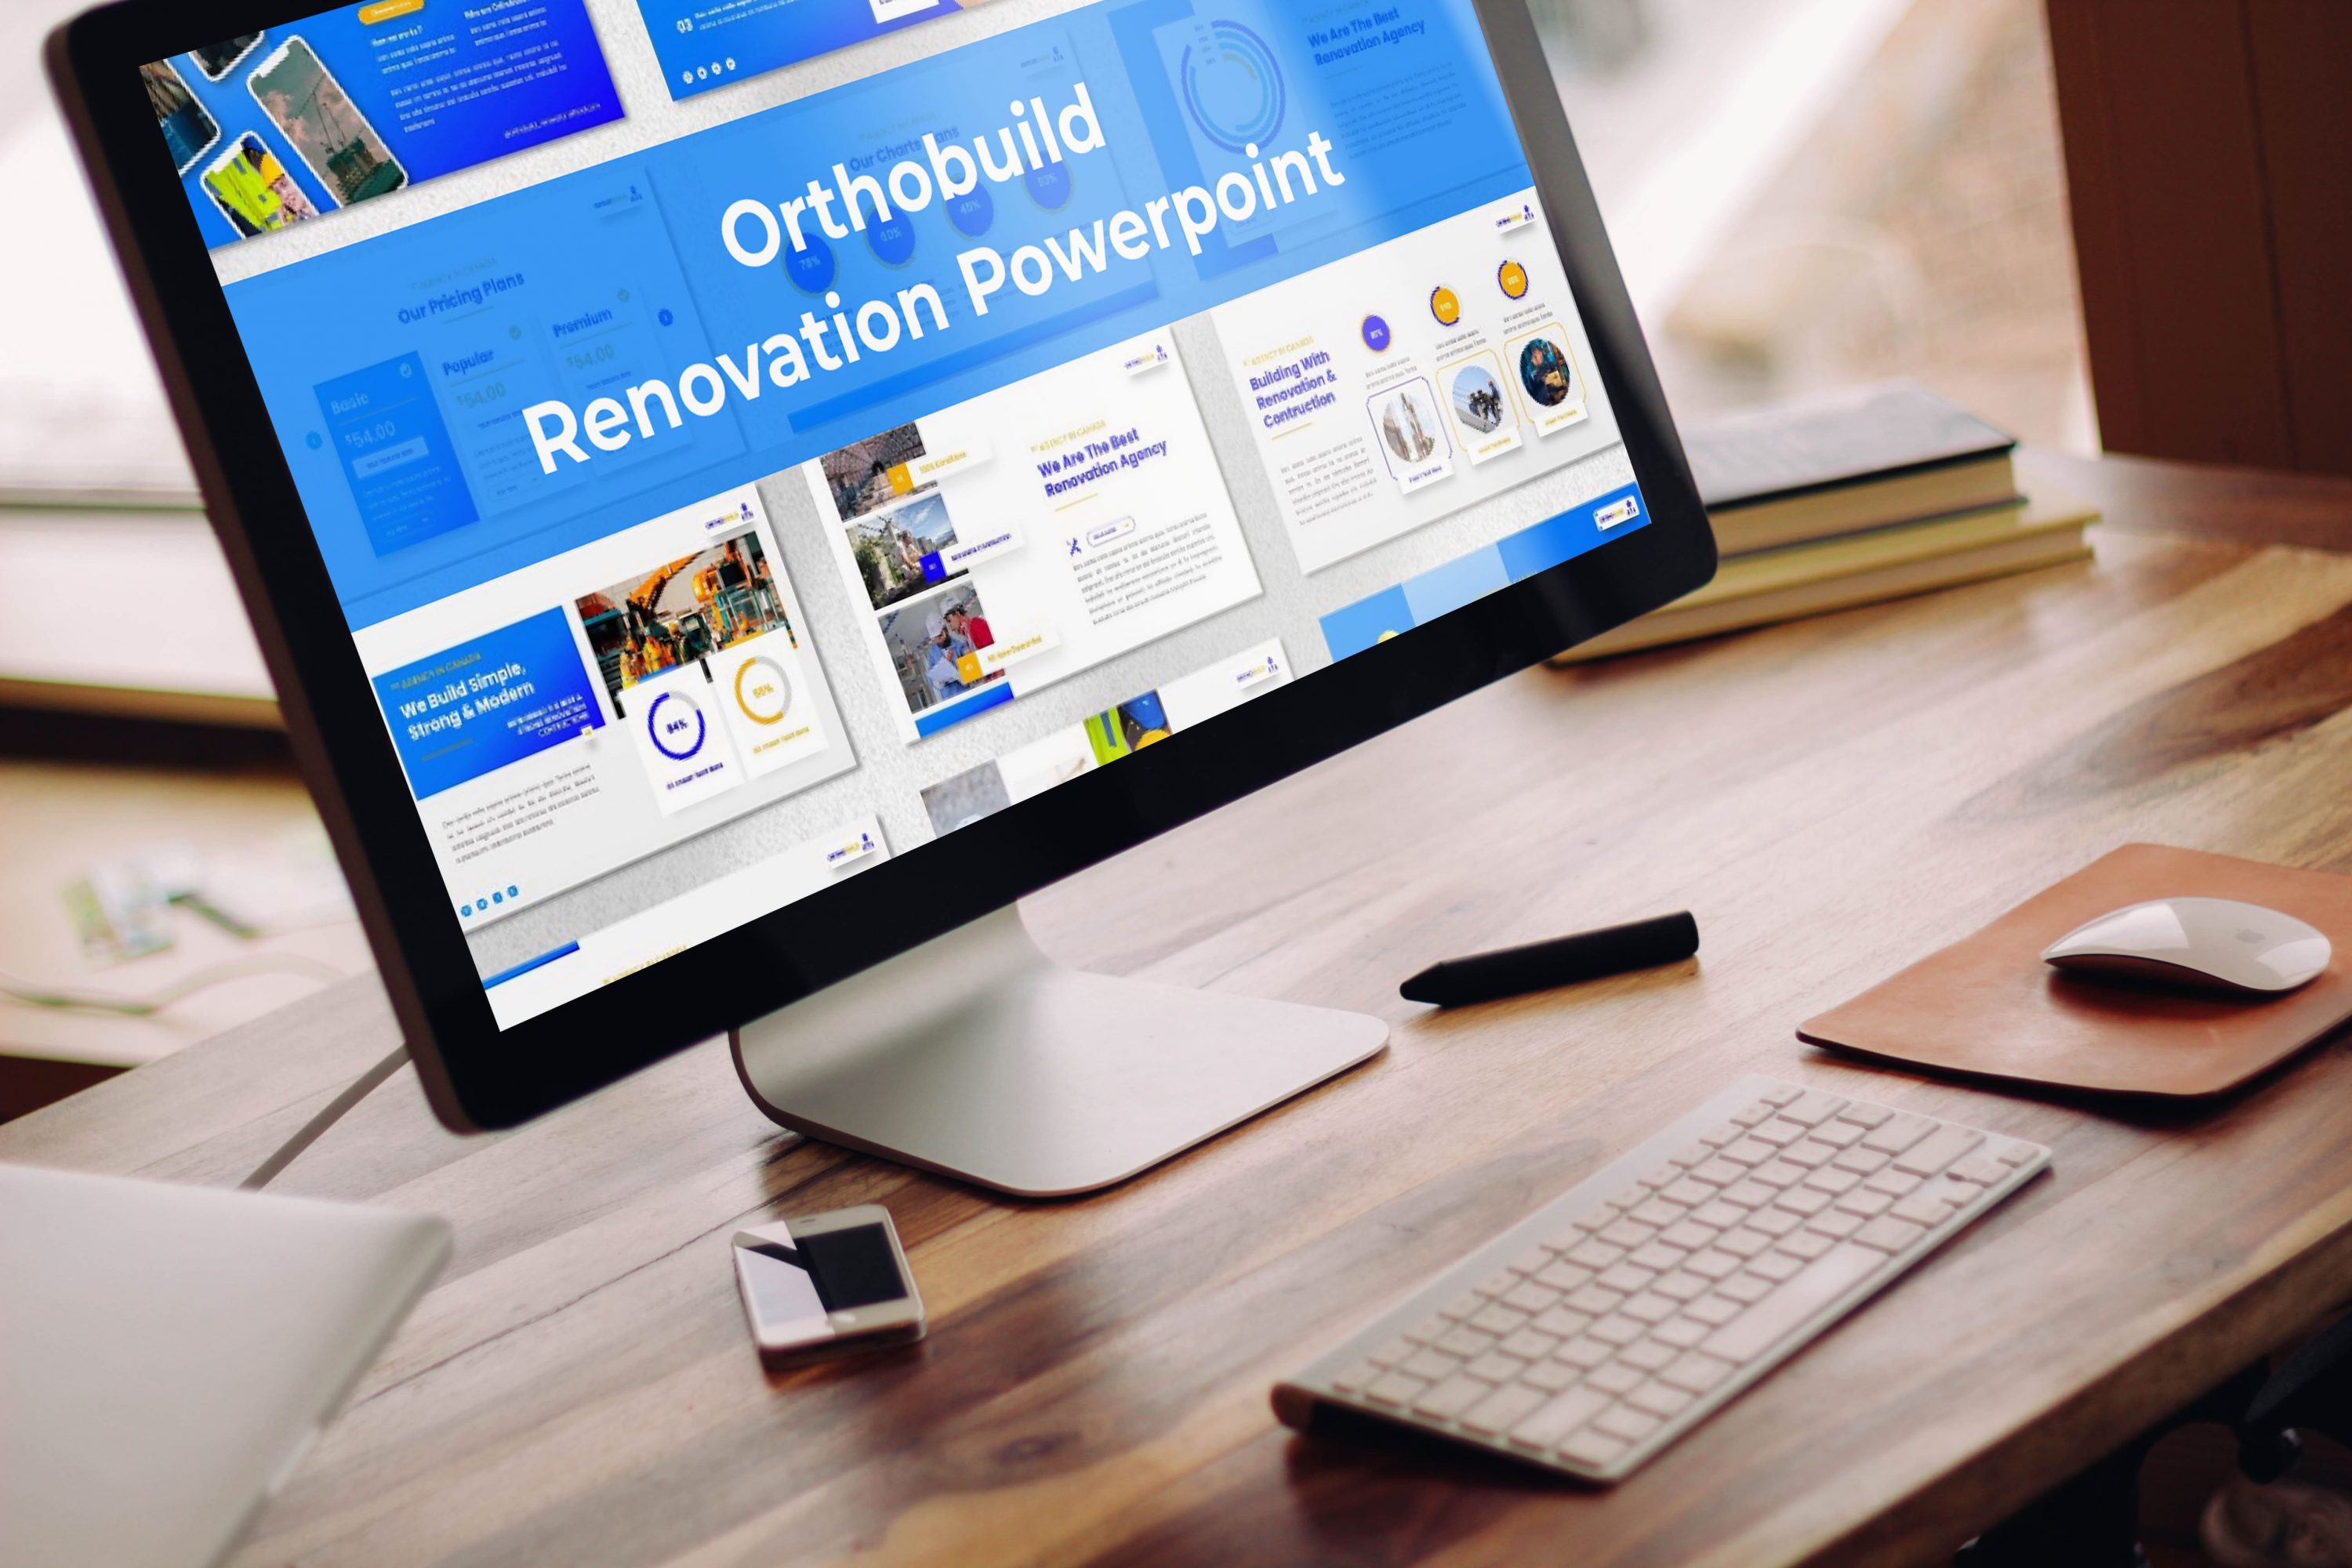 Orthobuild - Renovation Powerpoint by MasterBundles Desktop preview mockup image.